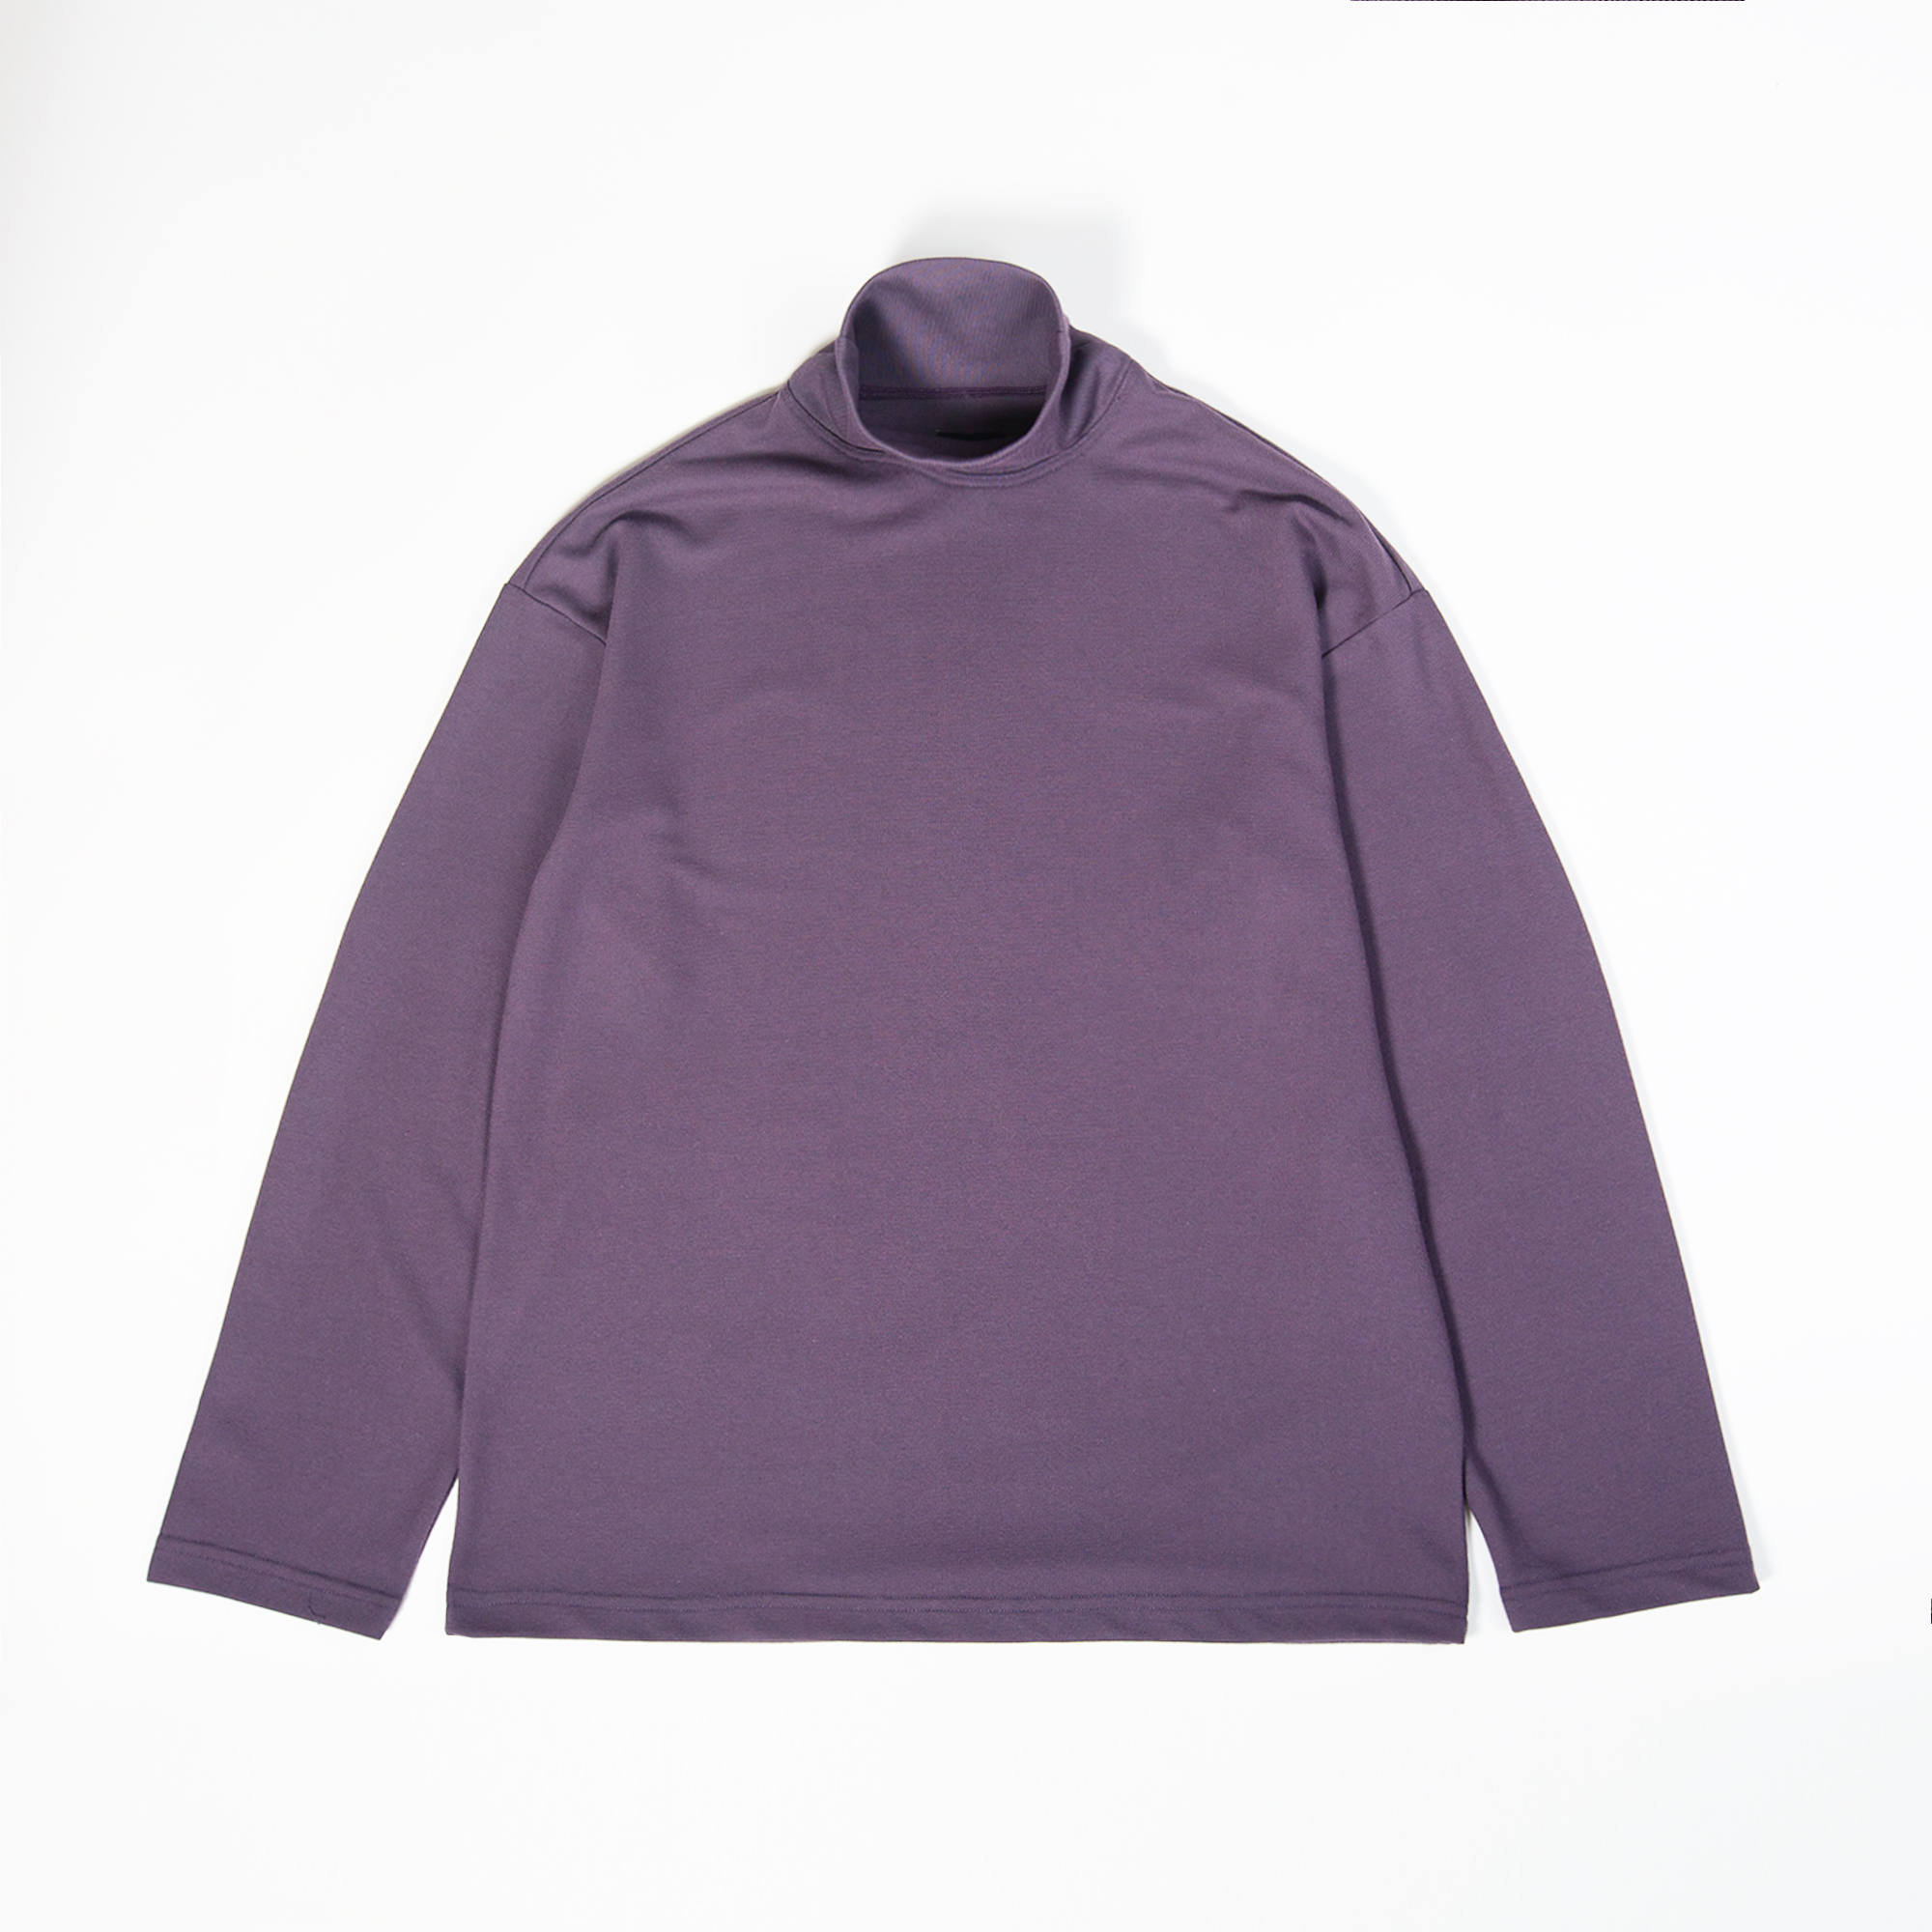 ORLO t-shirt in Purple color by Arpenteur